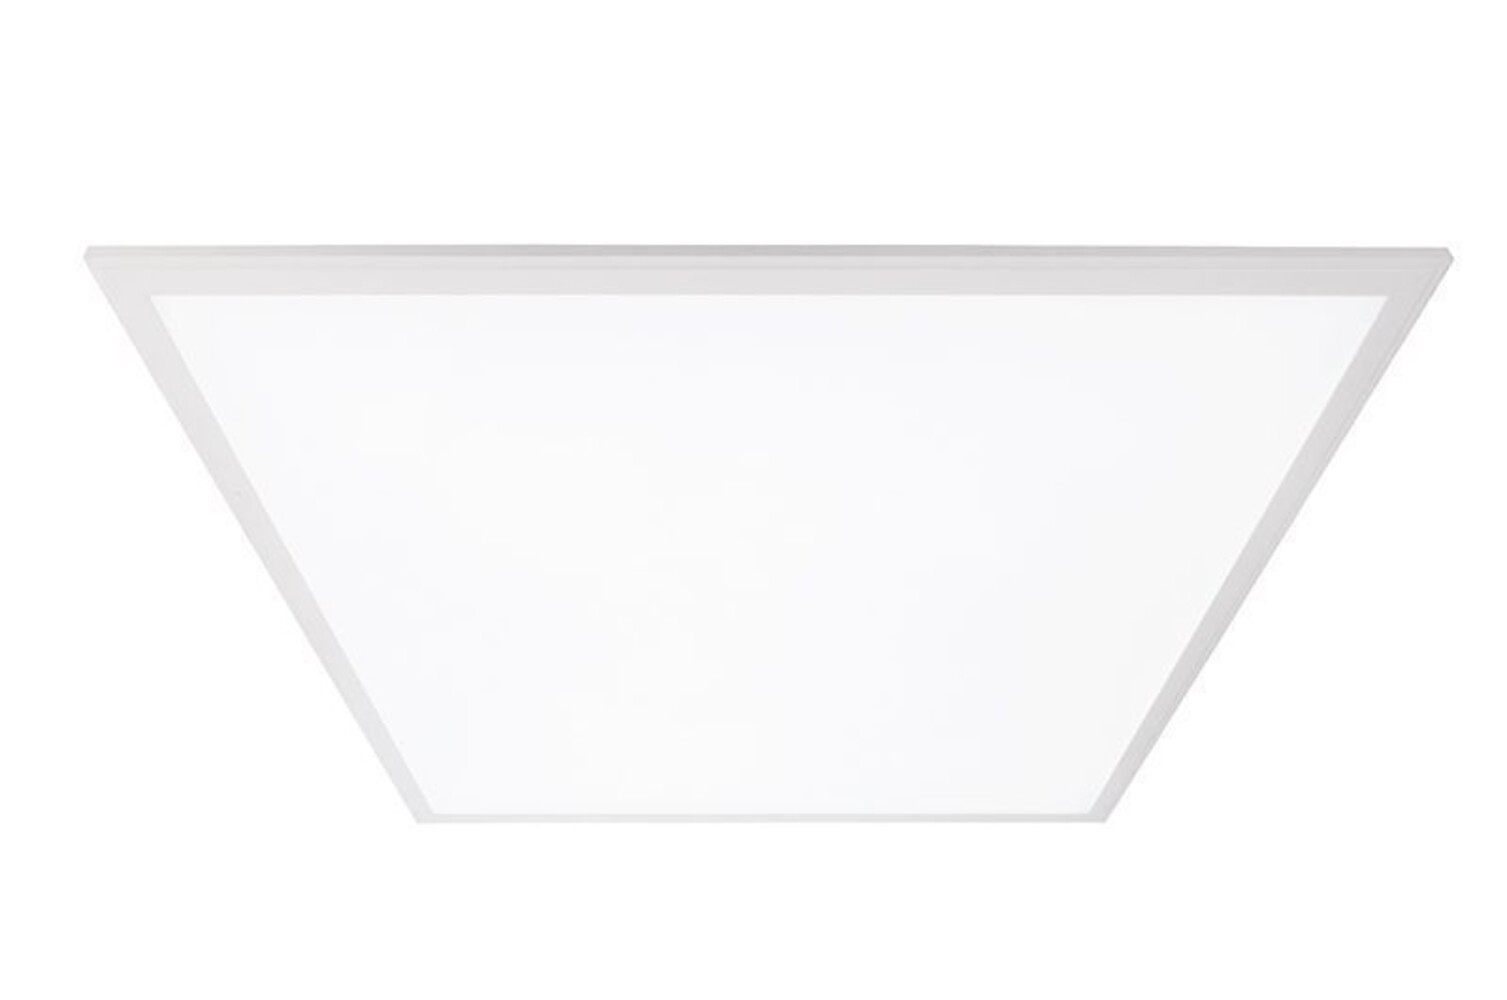 Hochwertiges LED Panel der Marke Deko-Light, perfekt für moderne Beleuchtung